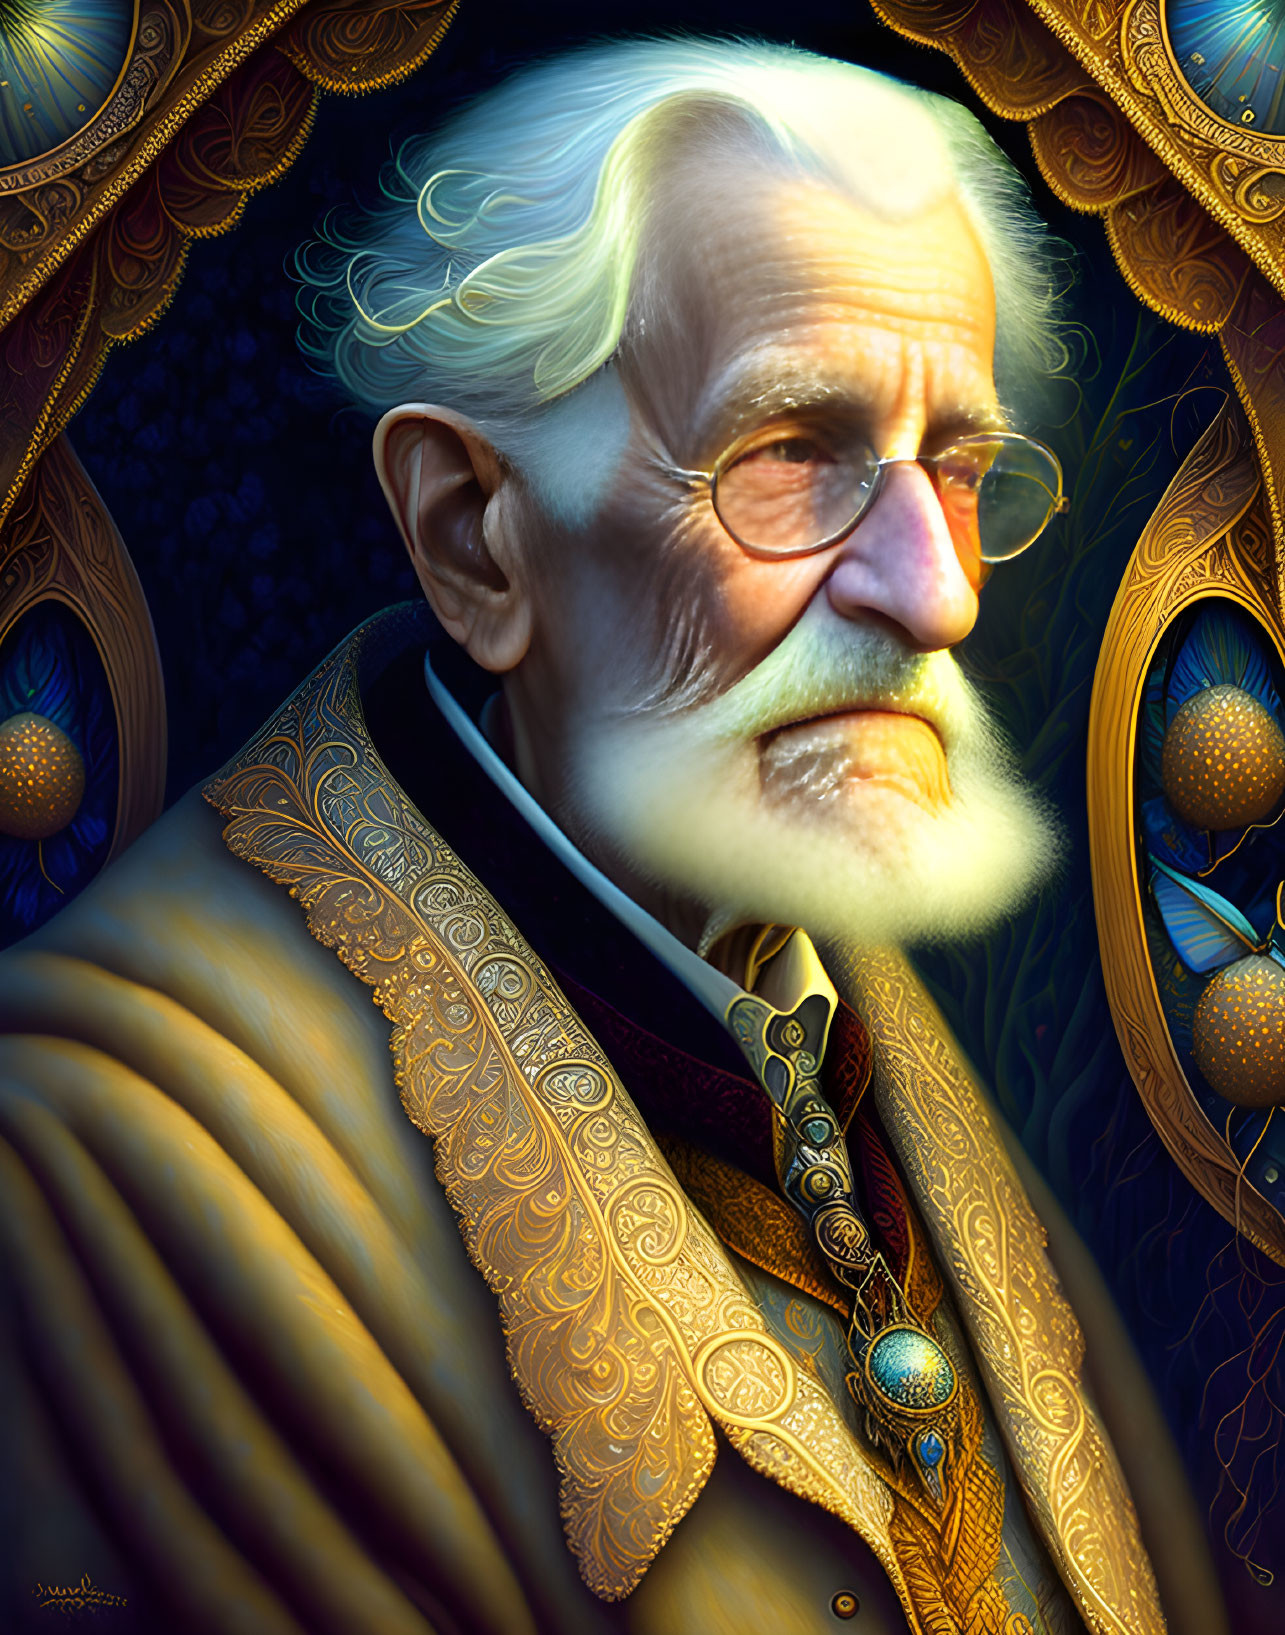 Elderly man with white hair, mustache, glasses, ornate gold-patterned attire.